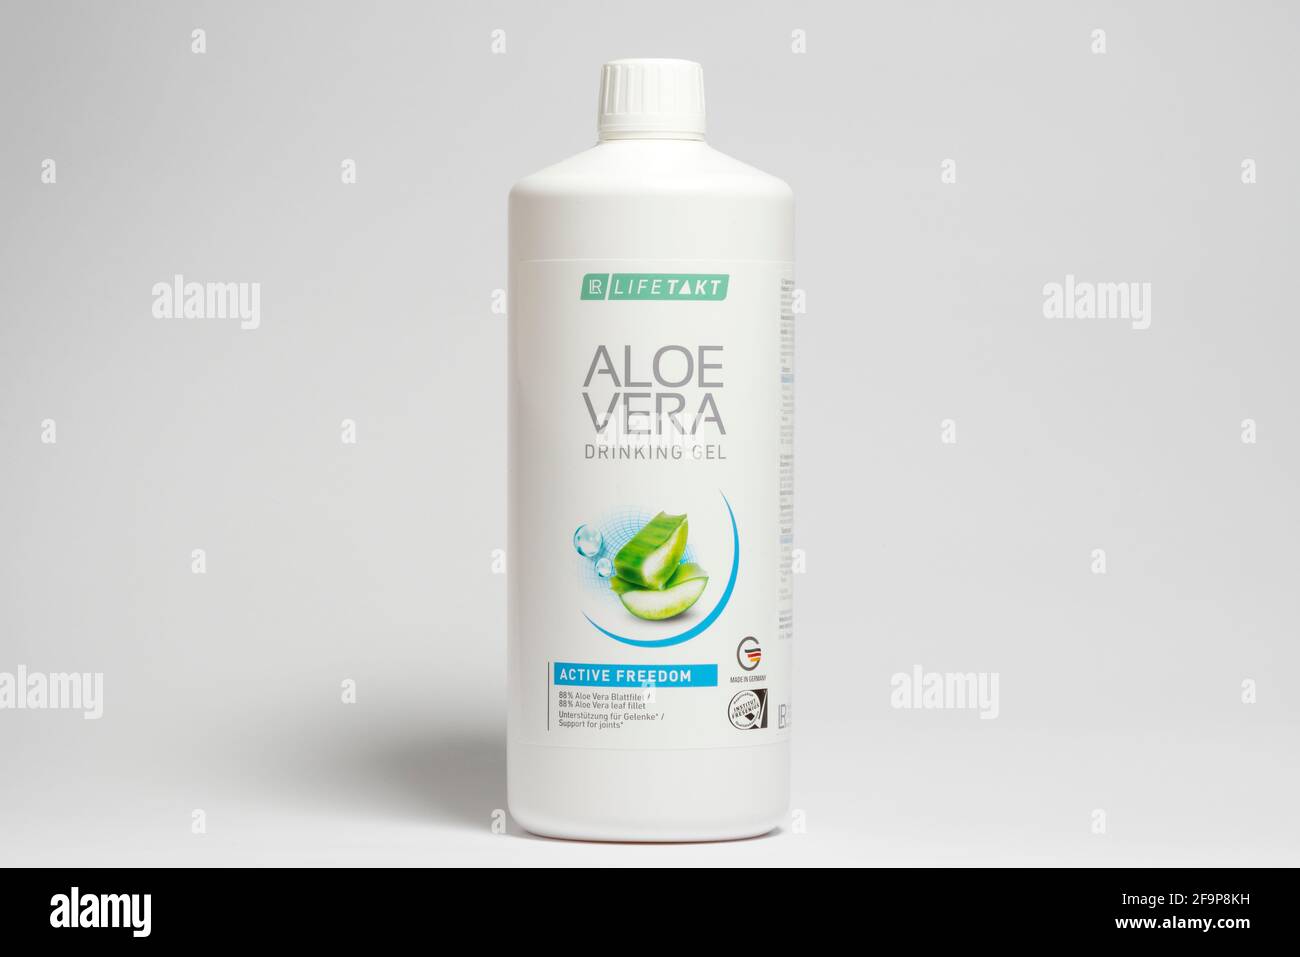 Aloe Vera drinking gel 500ml bottle on white Stock Photo - Alamy